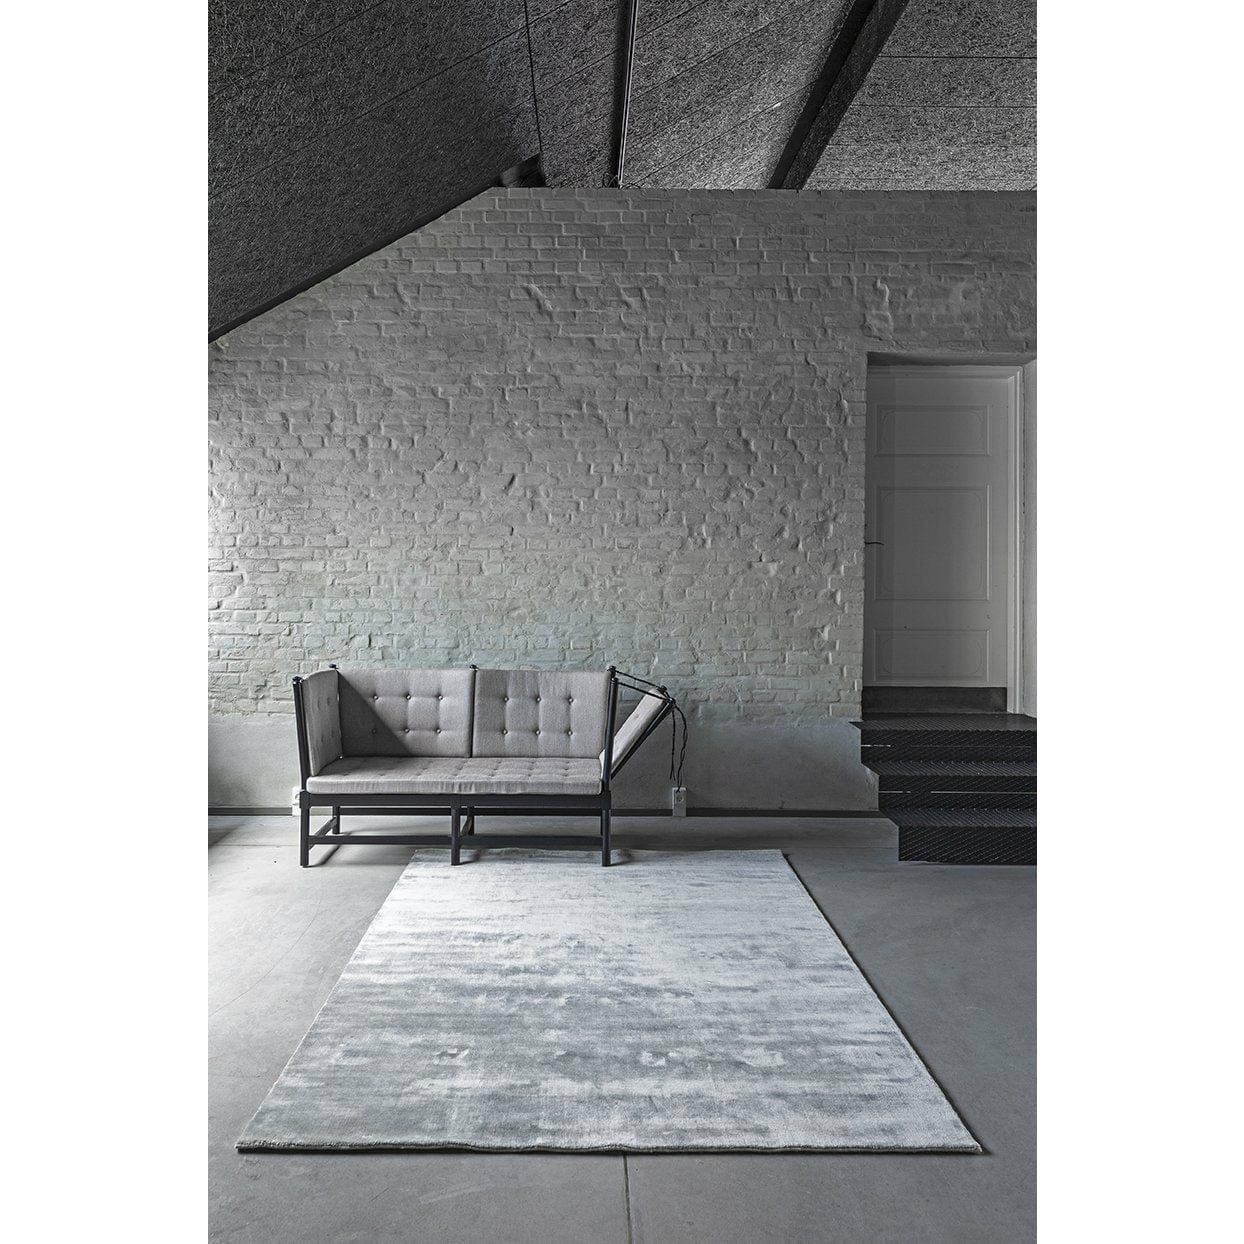 Massimo Earth Bamboo Gulvtæppe Concrete Grey, 140x200 cm